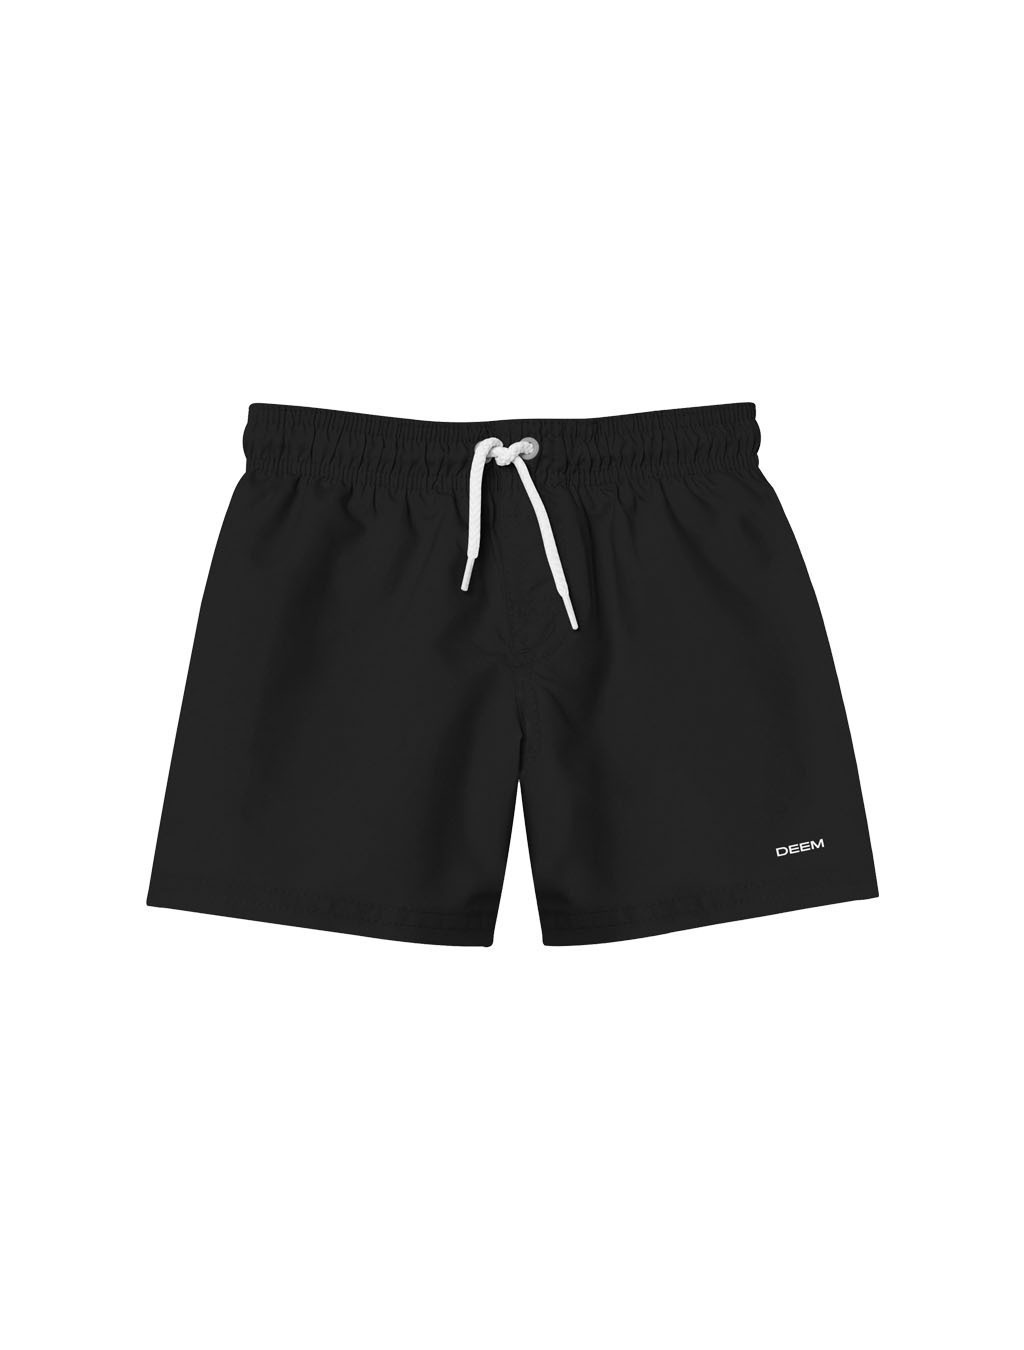 Classic Shorts | Black